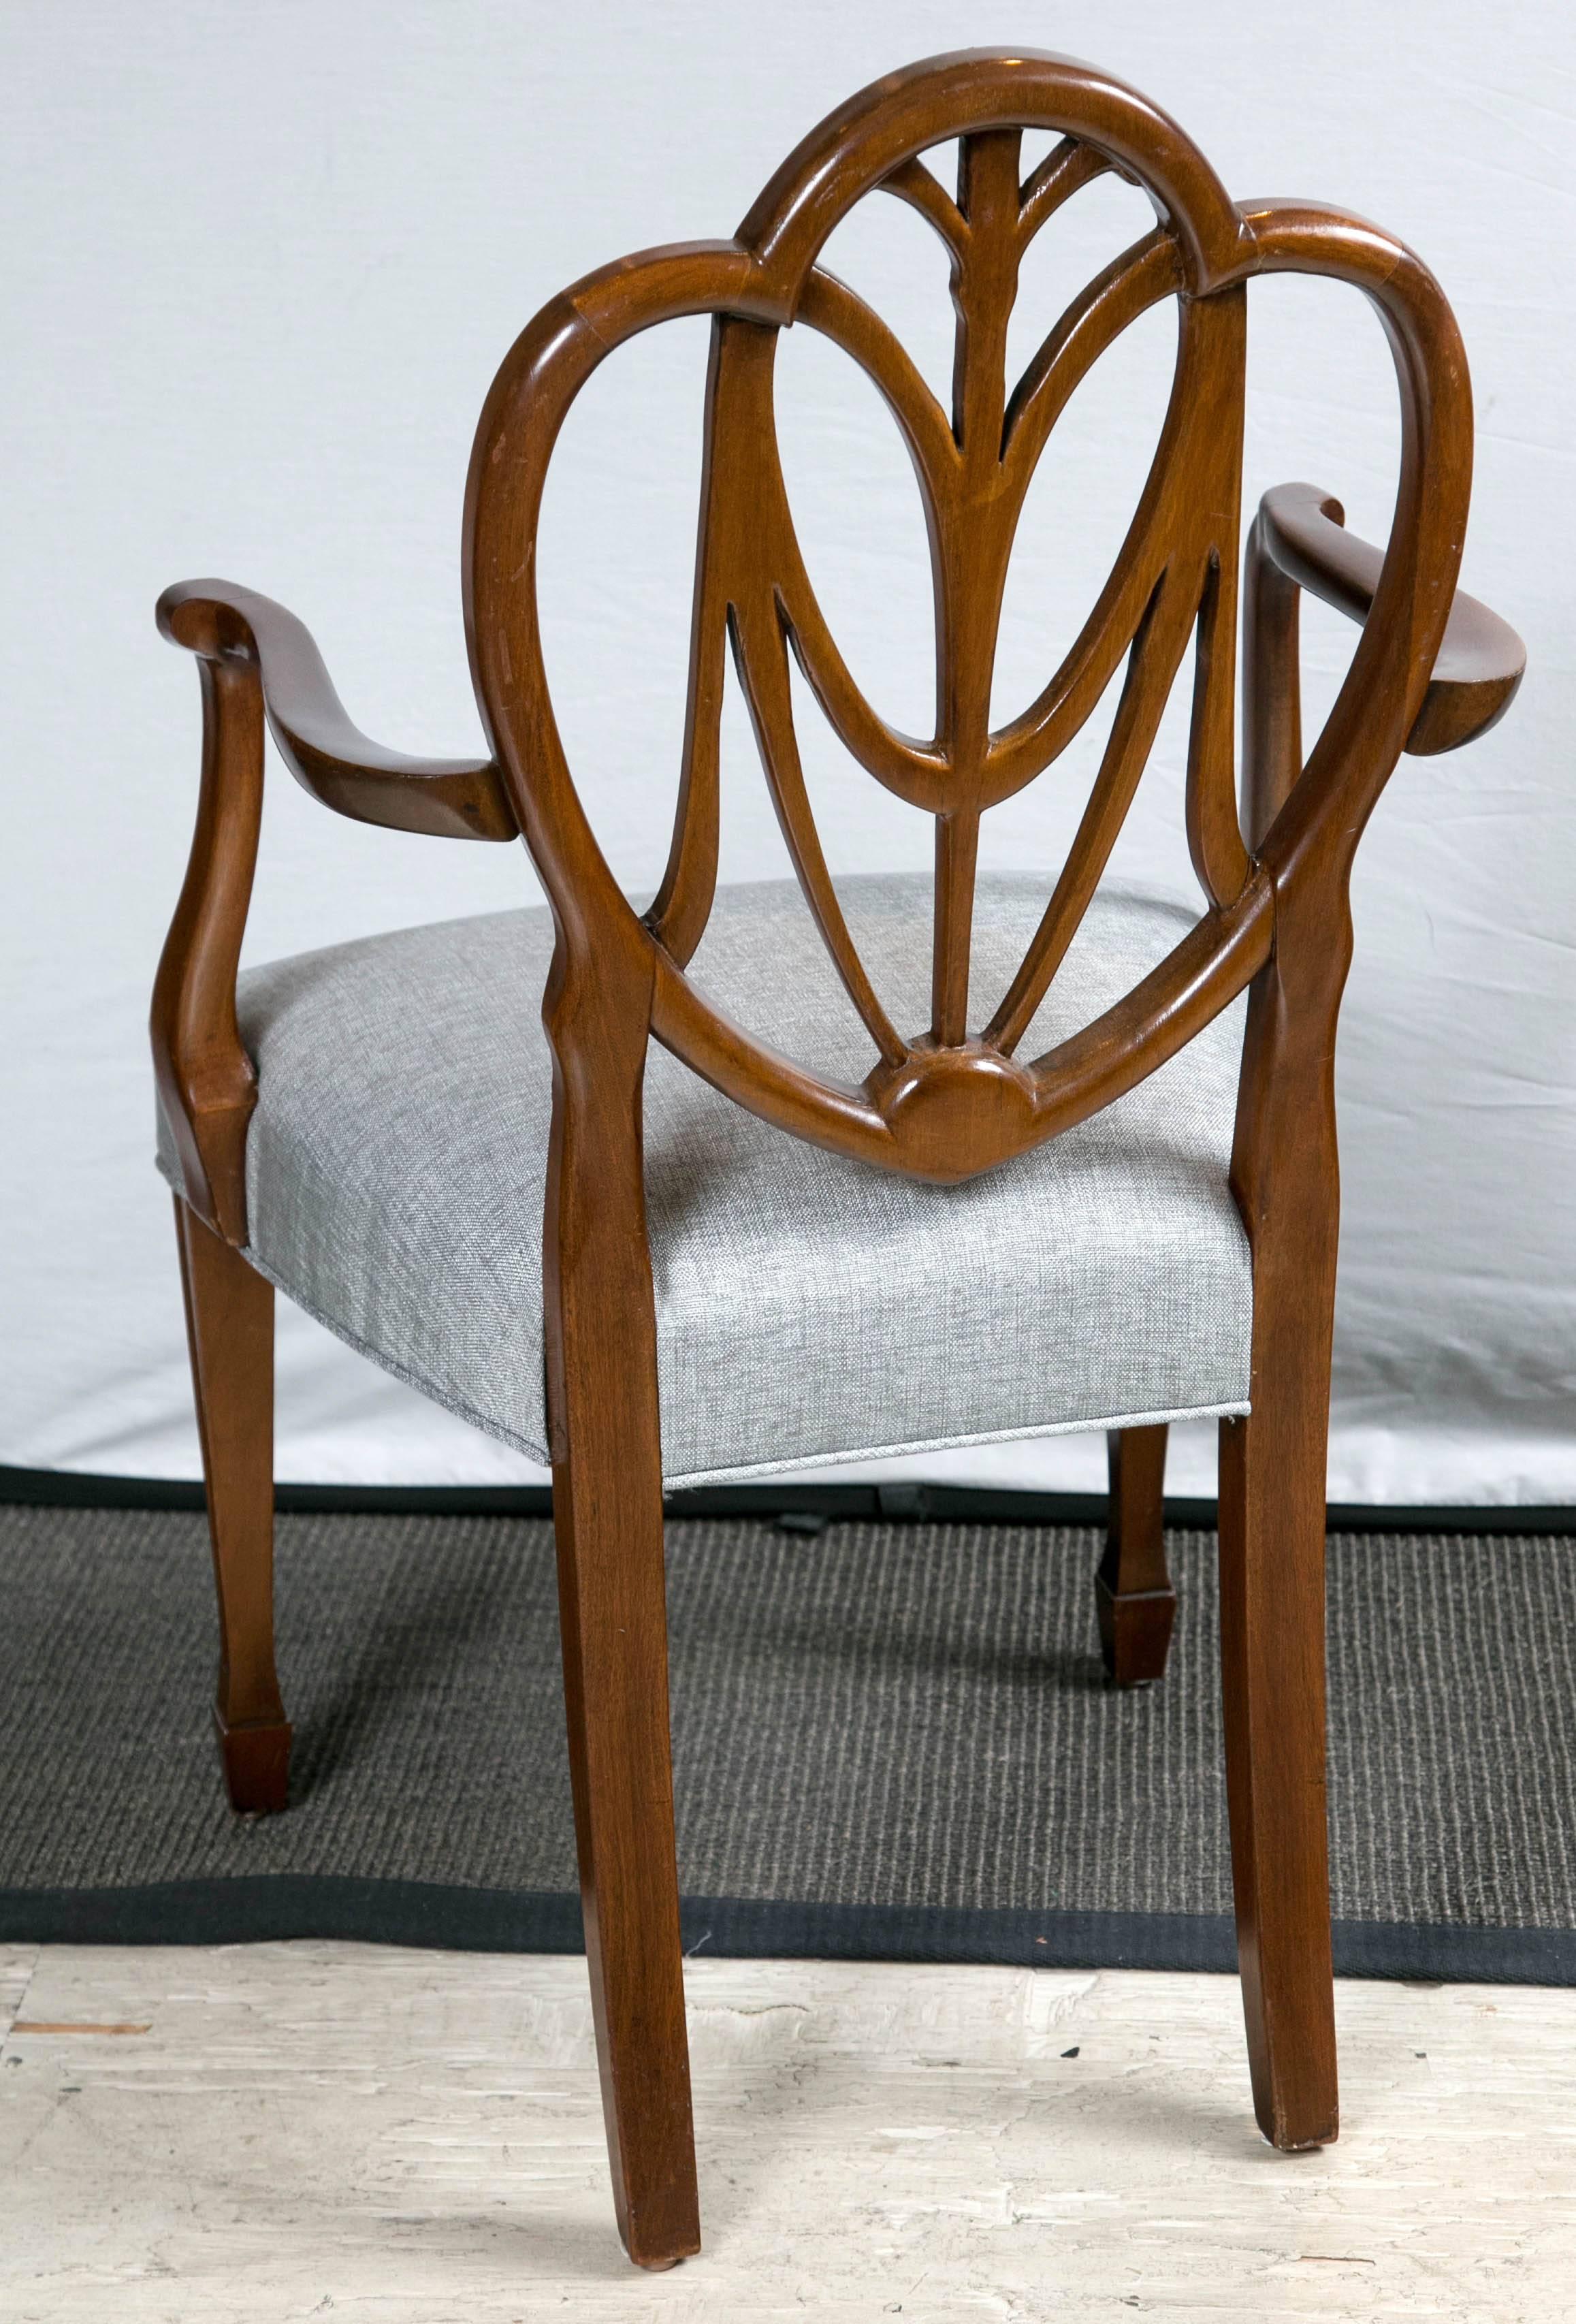 hepplewhite style chair